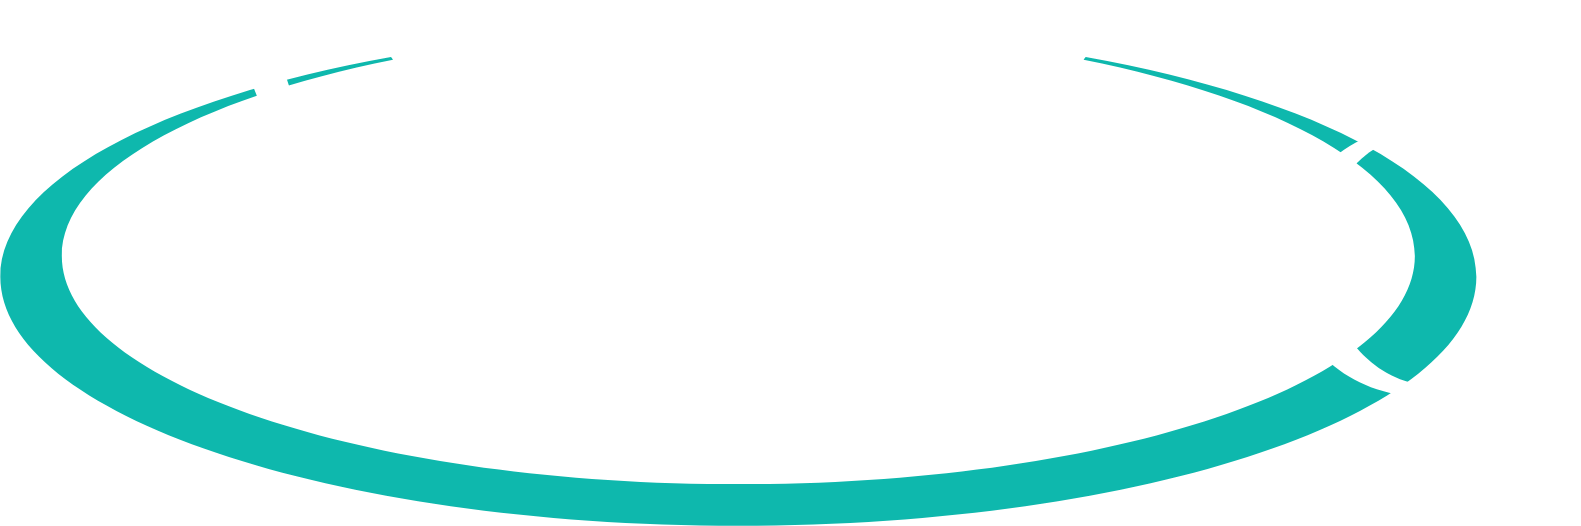 Veeco
 logo for dark backgrounds (transparent PNG)